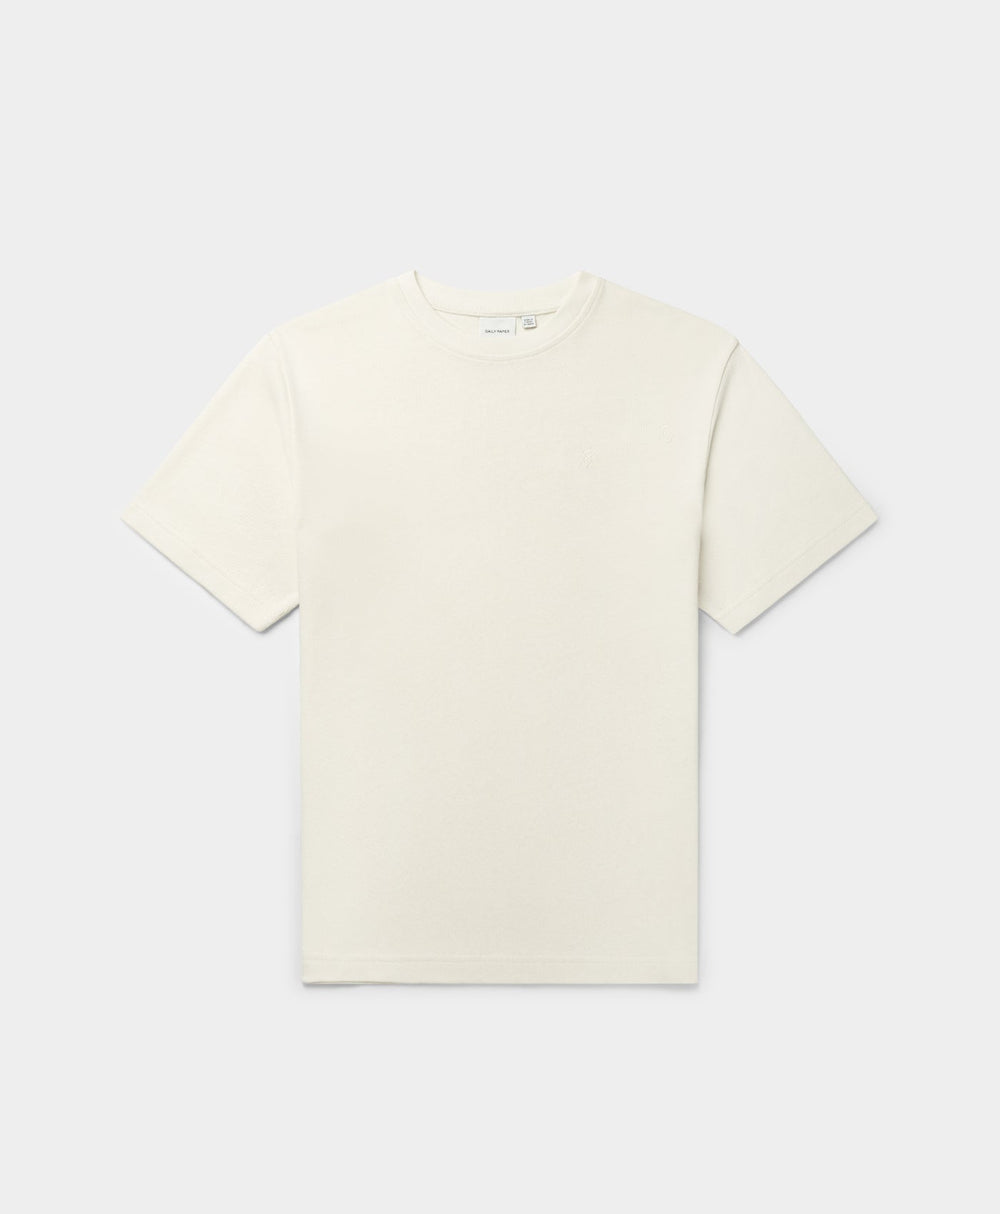 DP - Pristine White Knit T-Shirt - Packshot - Front